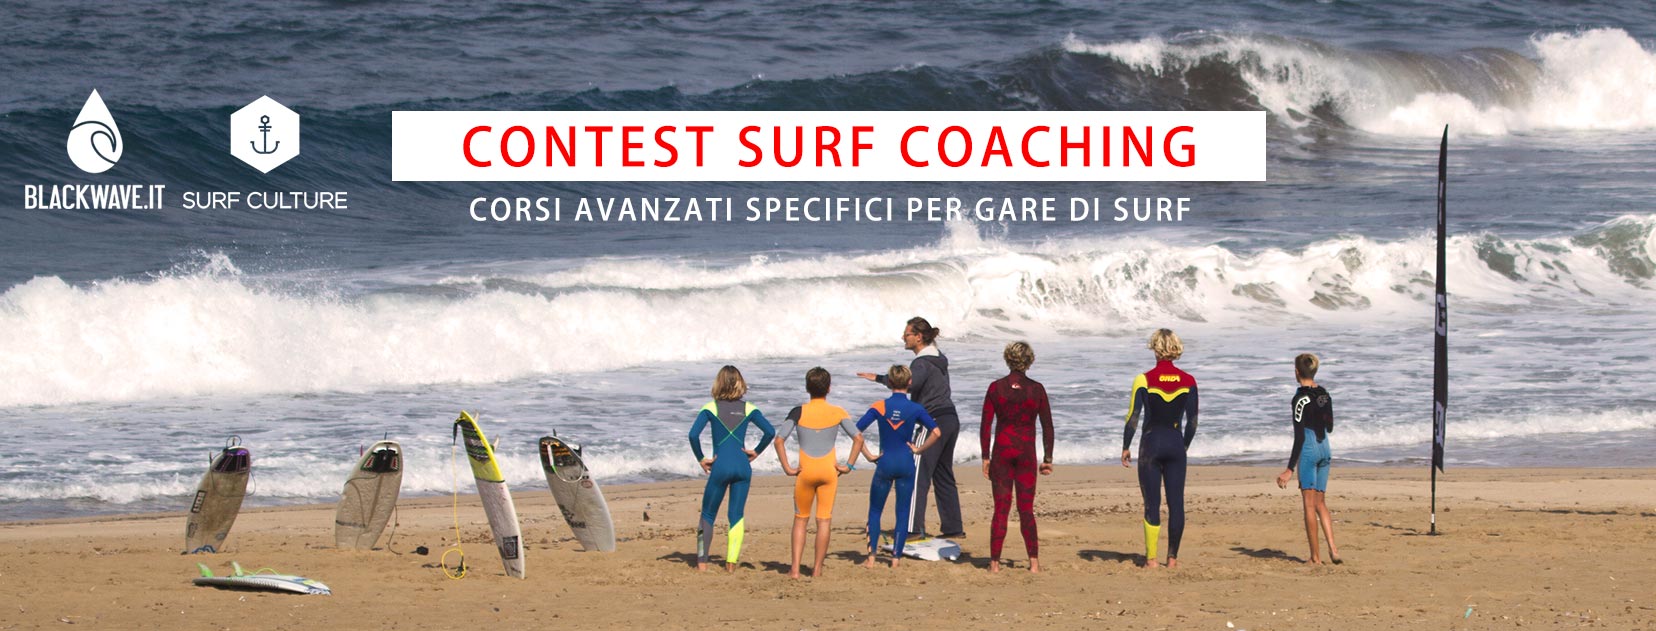 contest_surf_coaching_nicola_bresciani